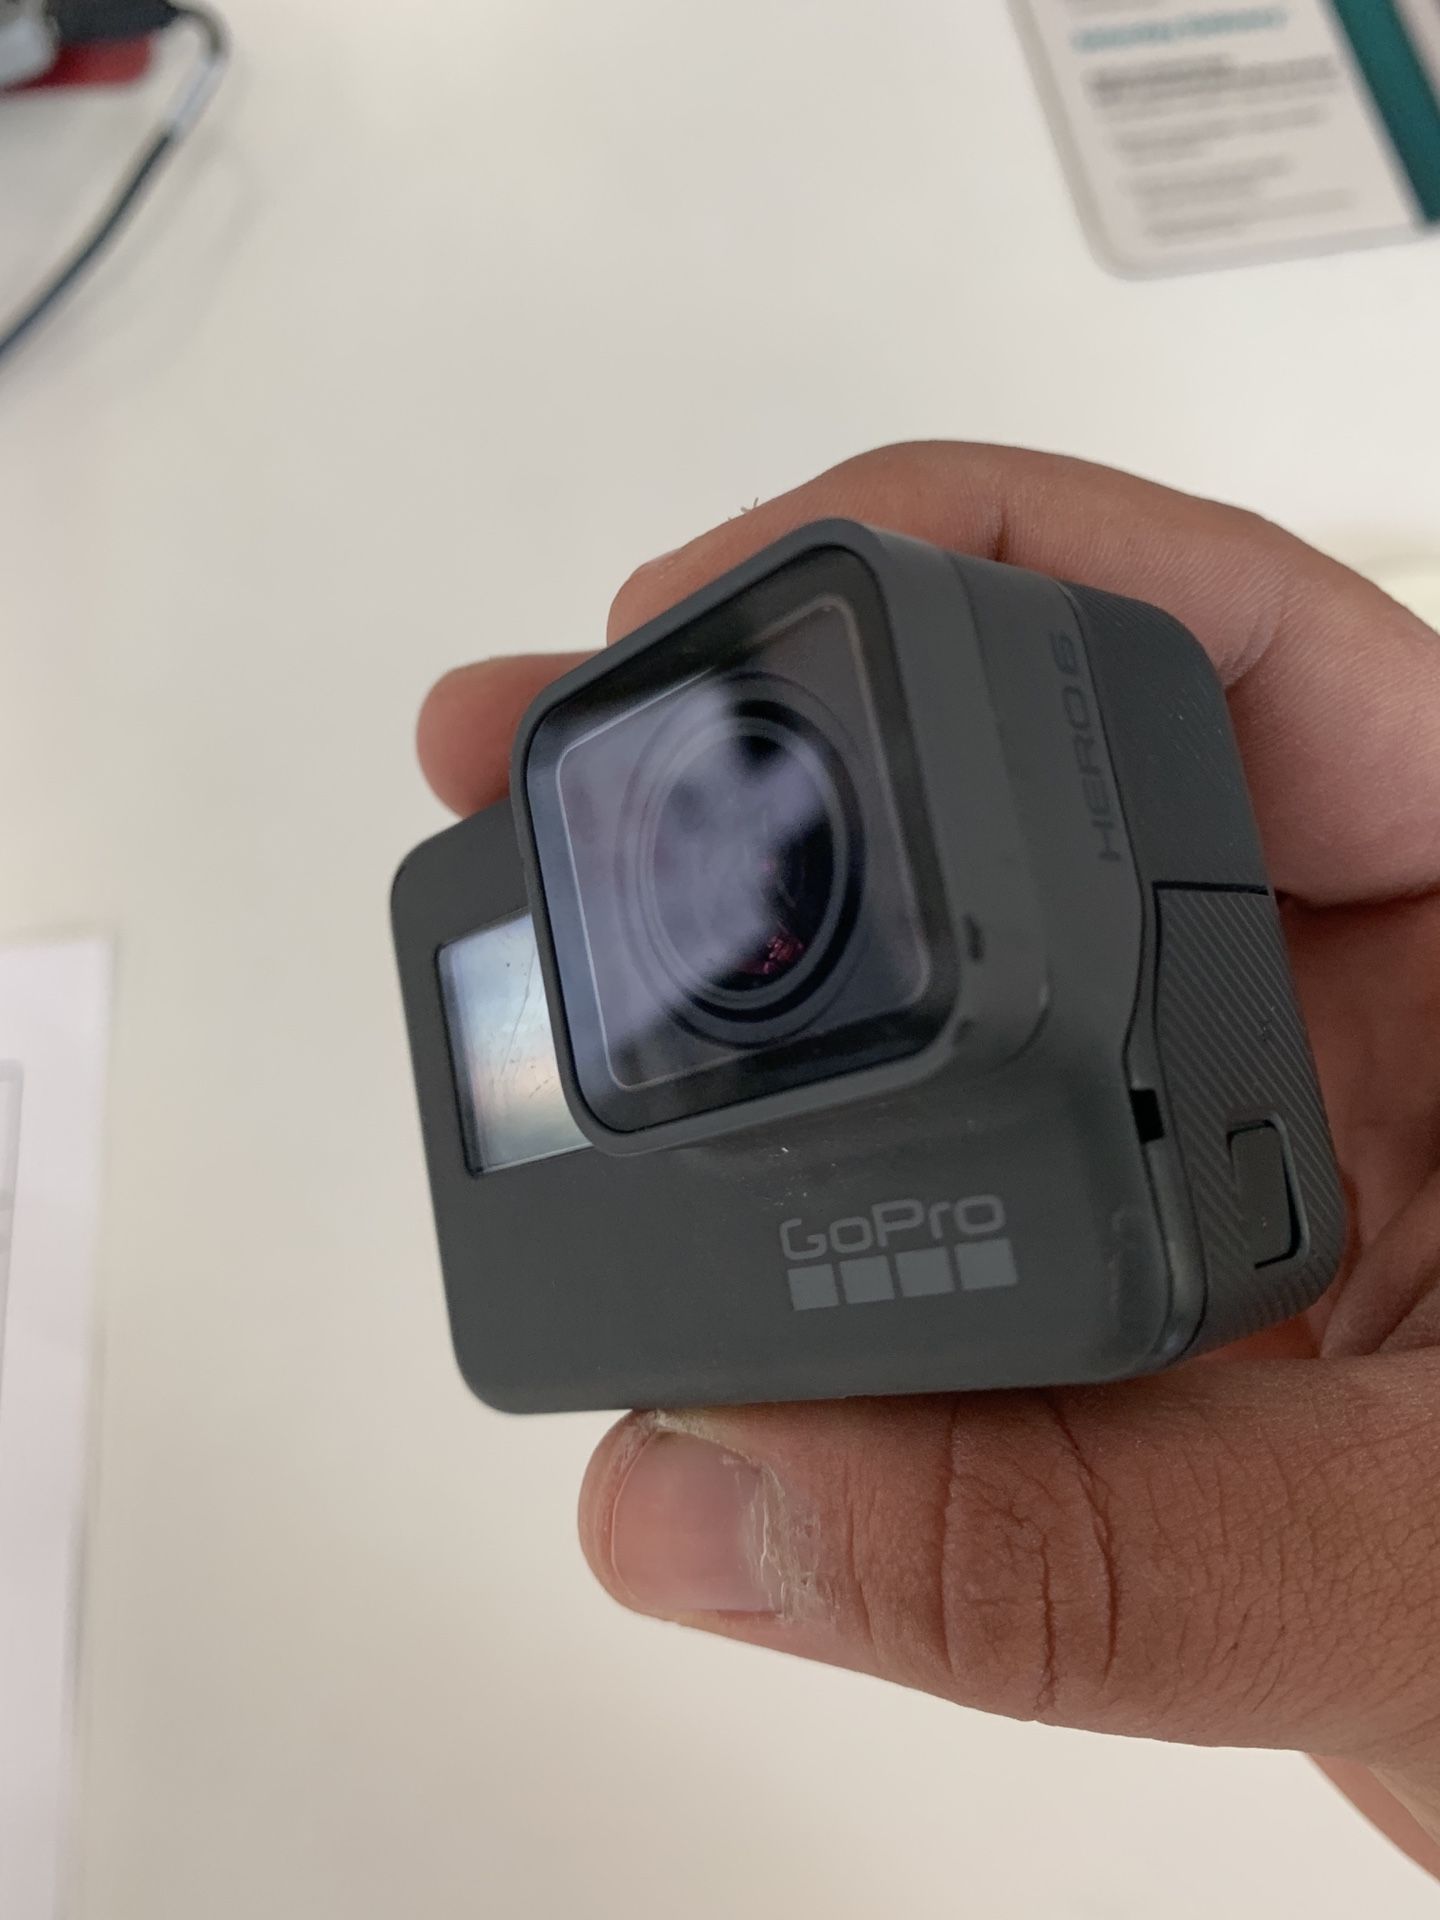 GoPro hero 6 video camera